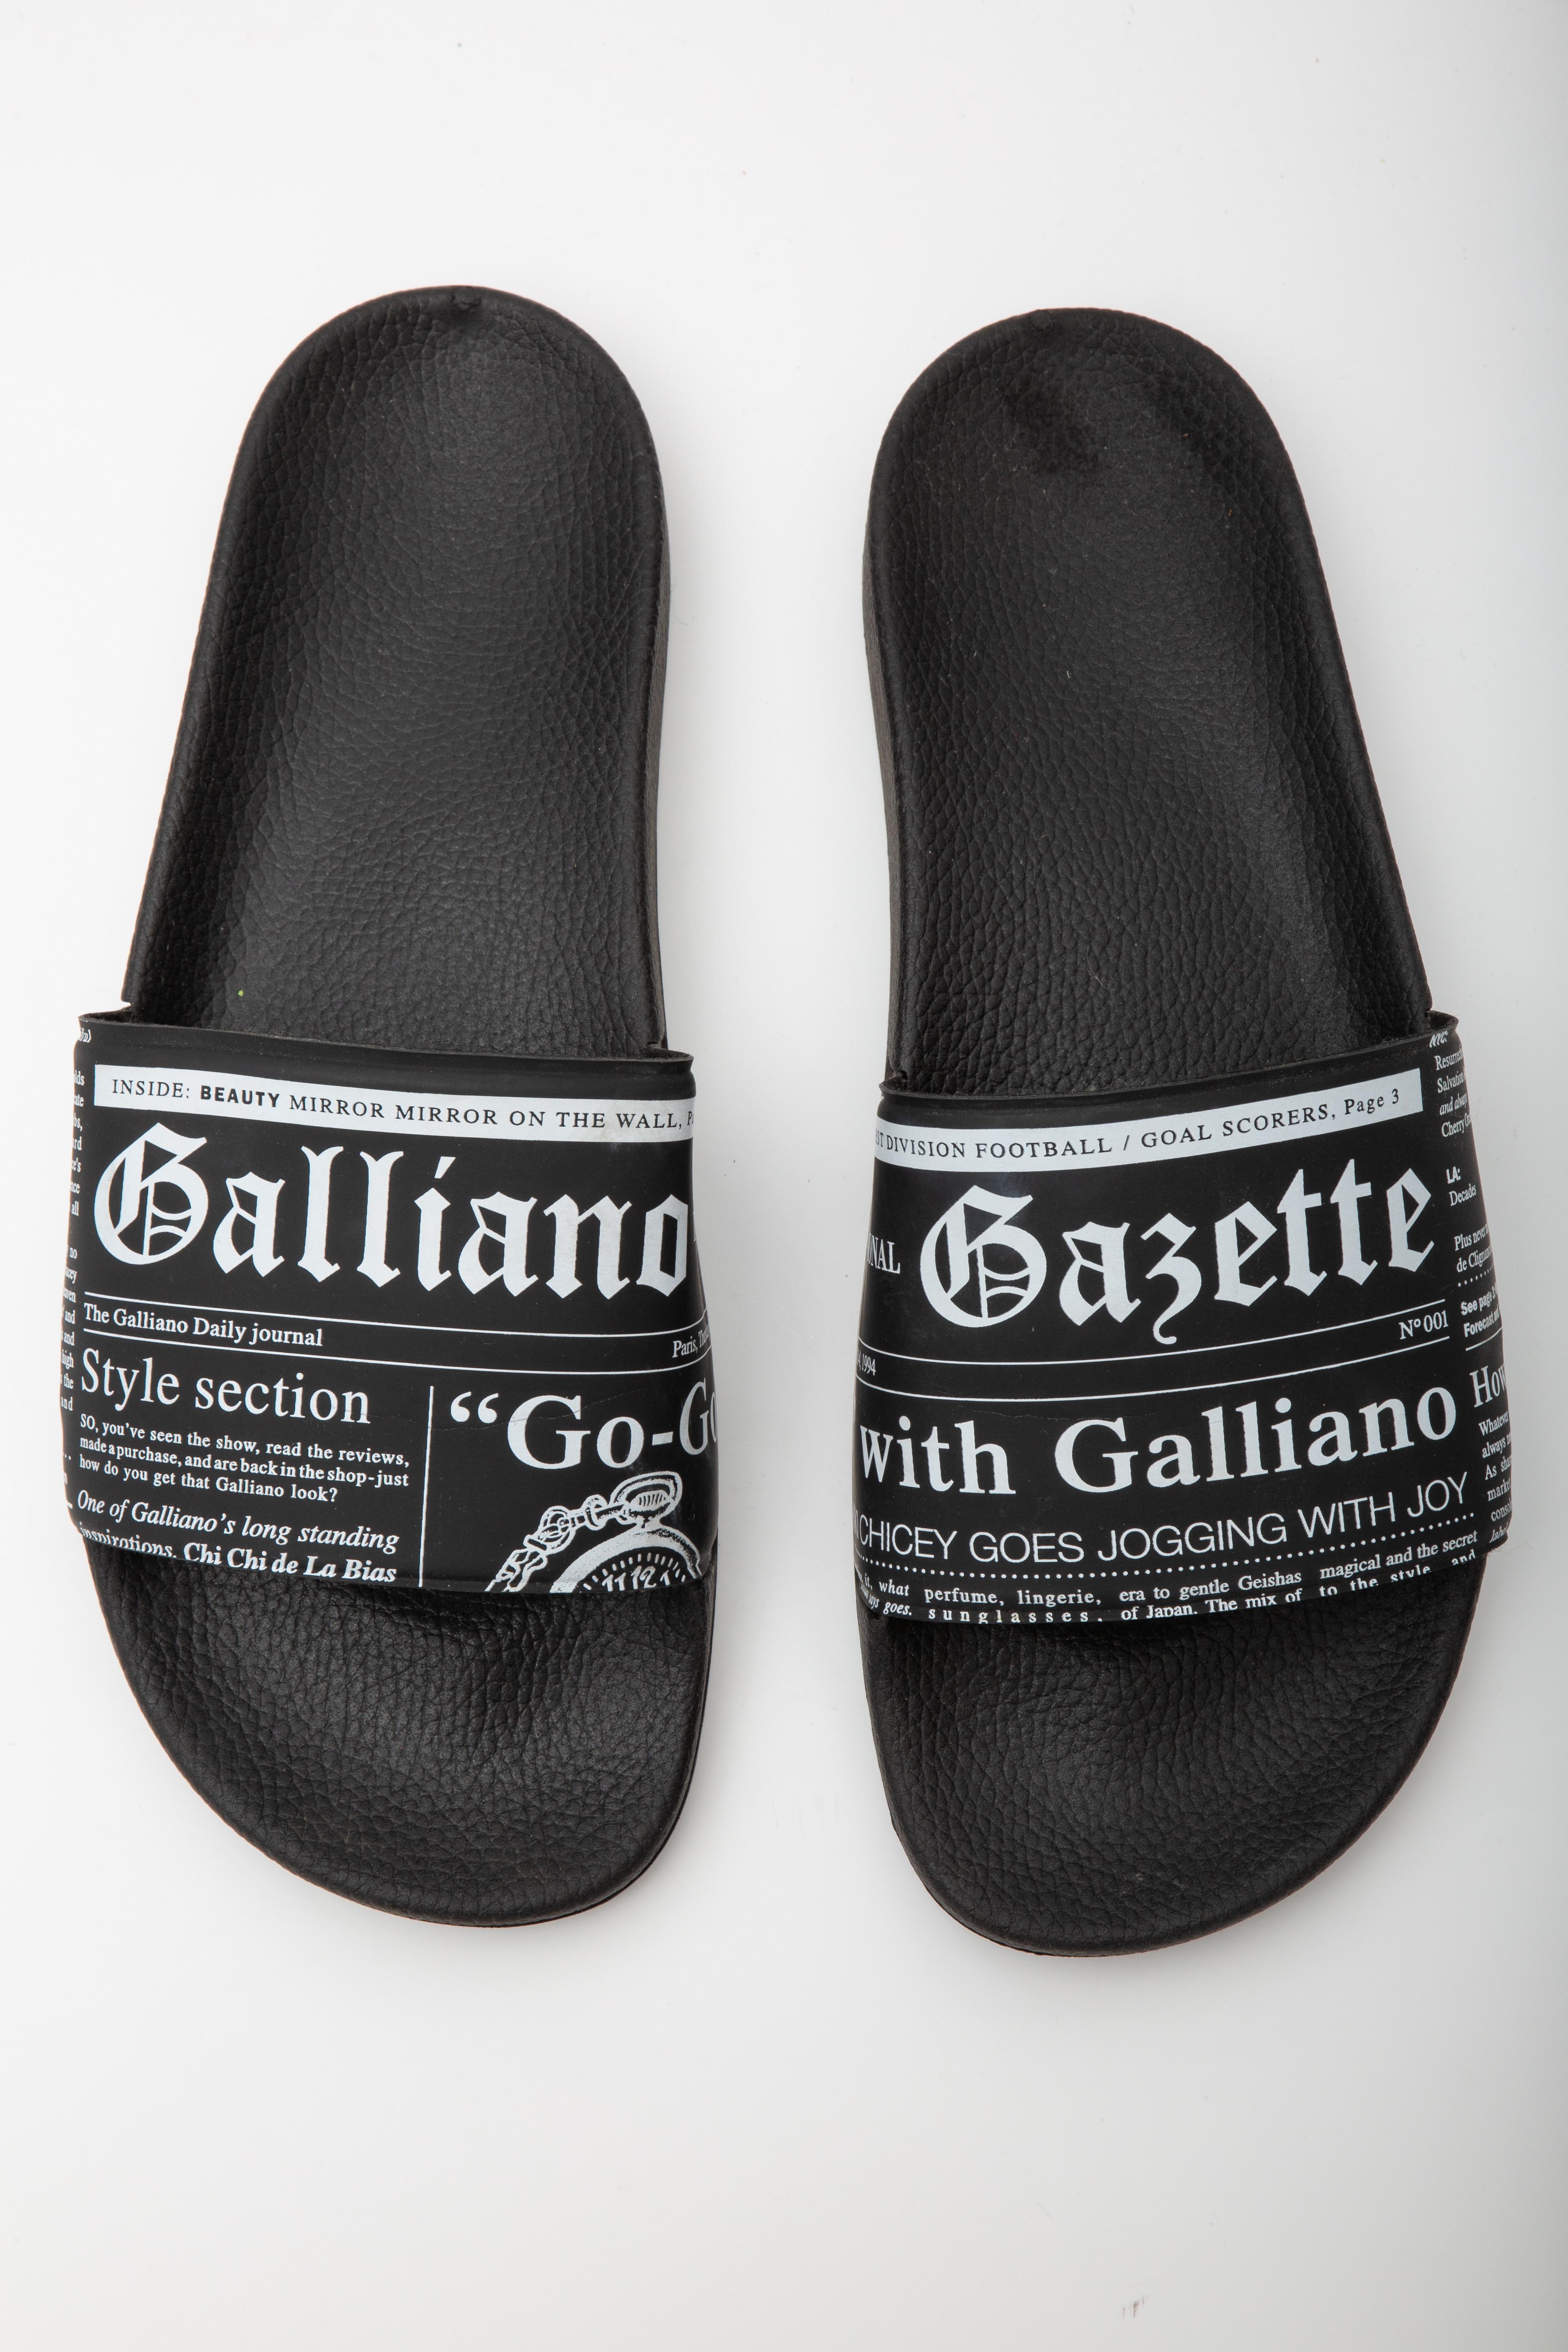 Black John Galliano Gazette Print Newspaper Unisex Pool Slides Sandals (US 8) For Sale